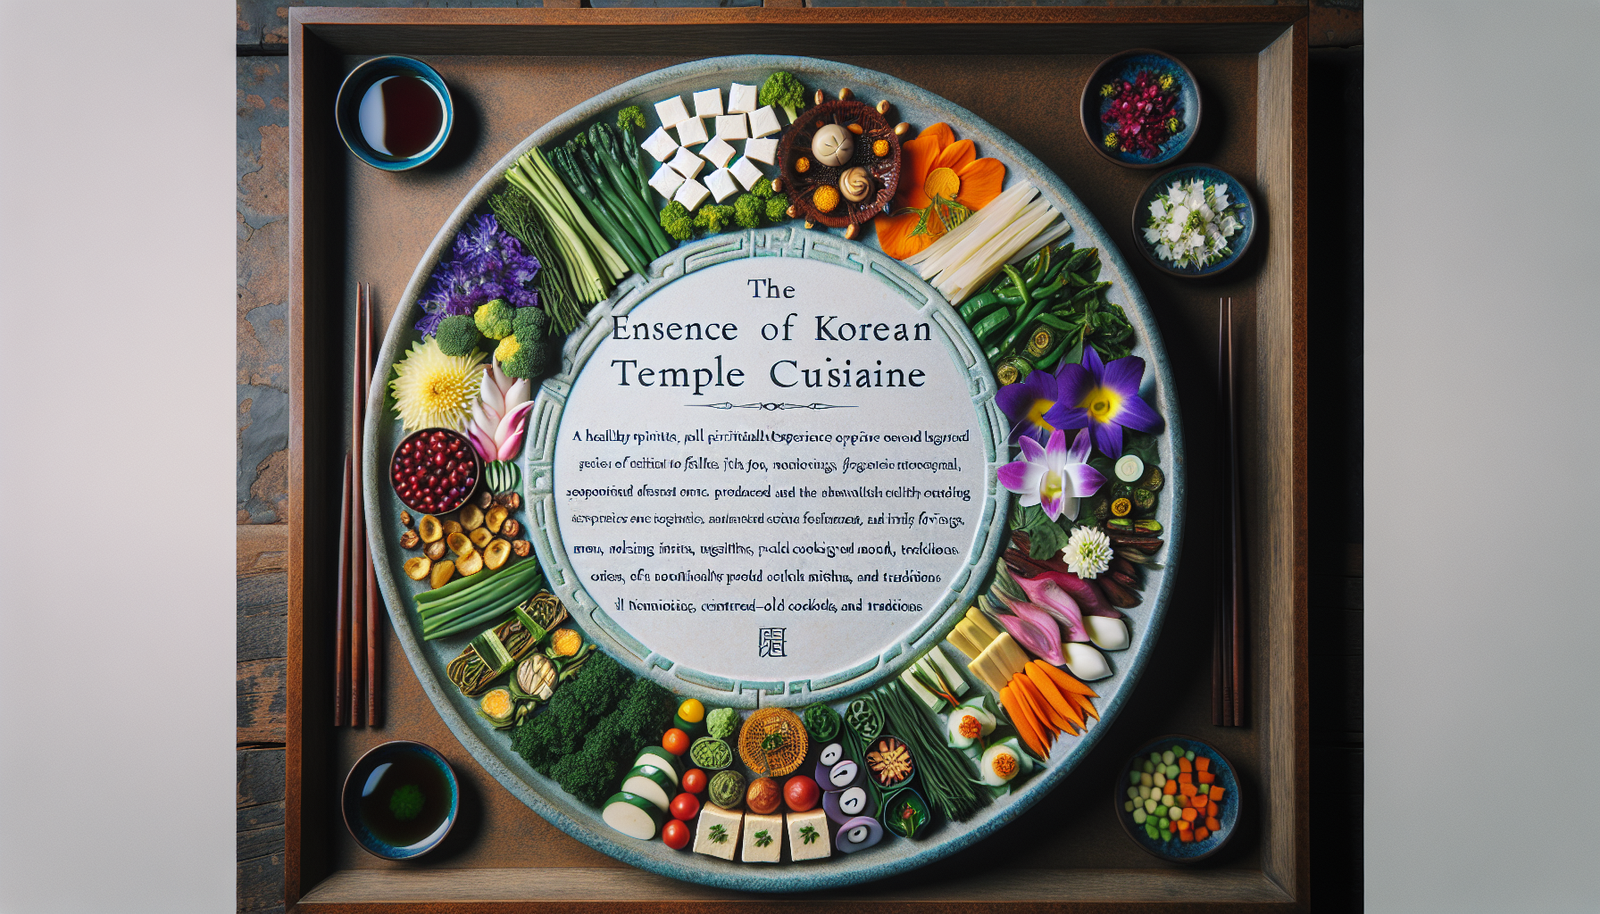 How Is Korean Temple Cuisine Different From Regular Korean Fare?